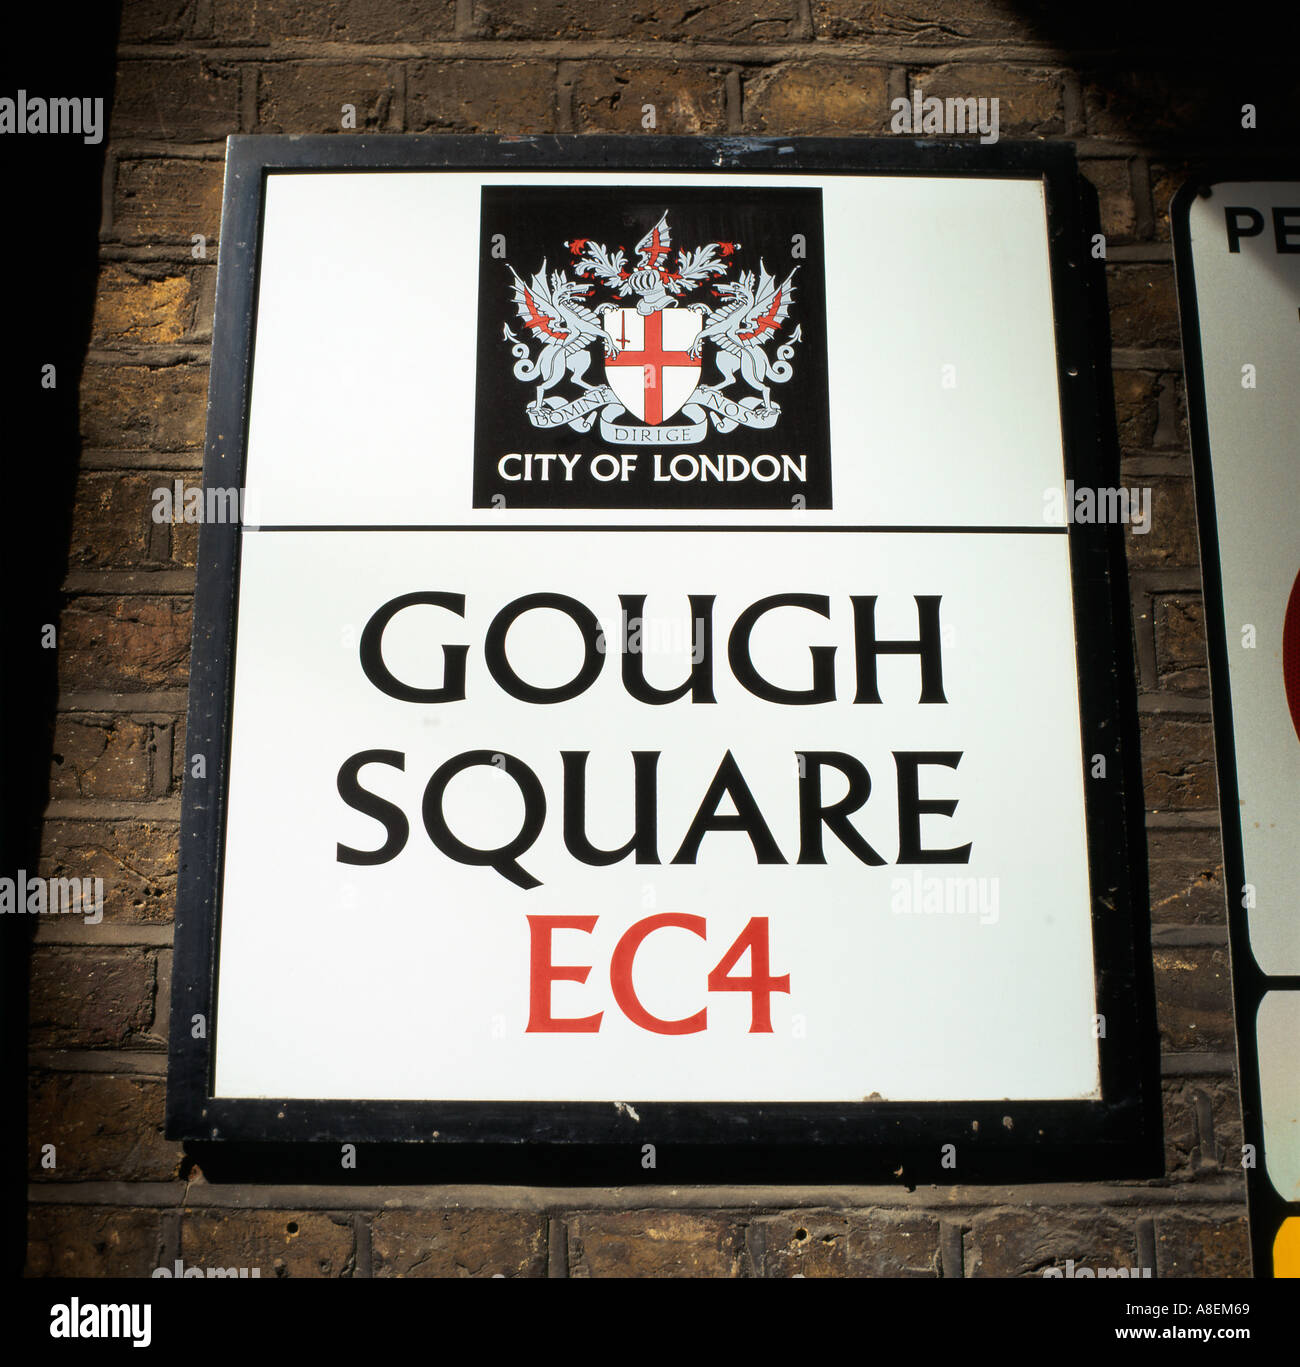 Gough Square City of London EC4 street sign London England UK  KATHY DEWITT Stock Photo